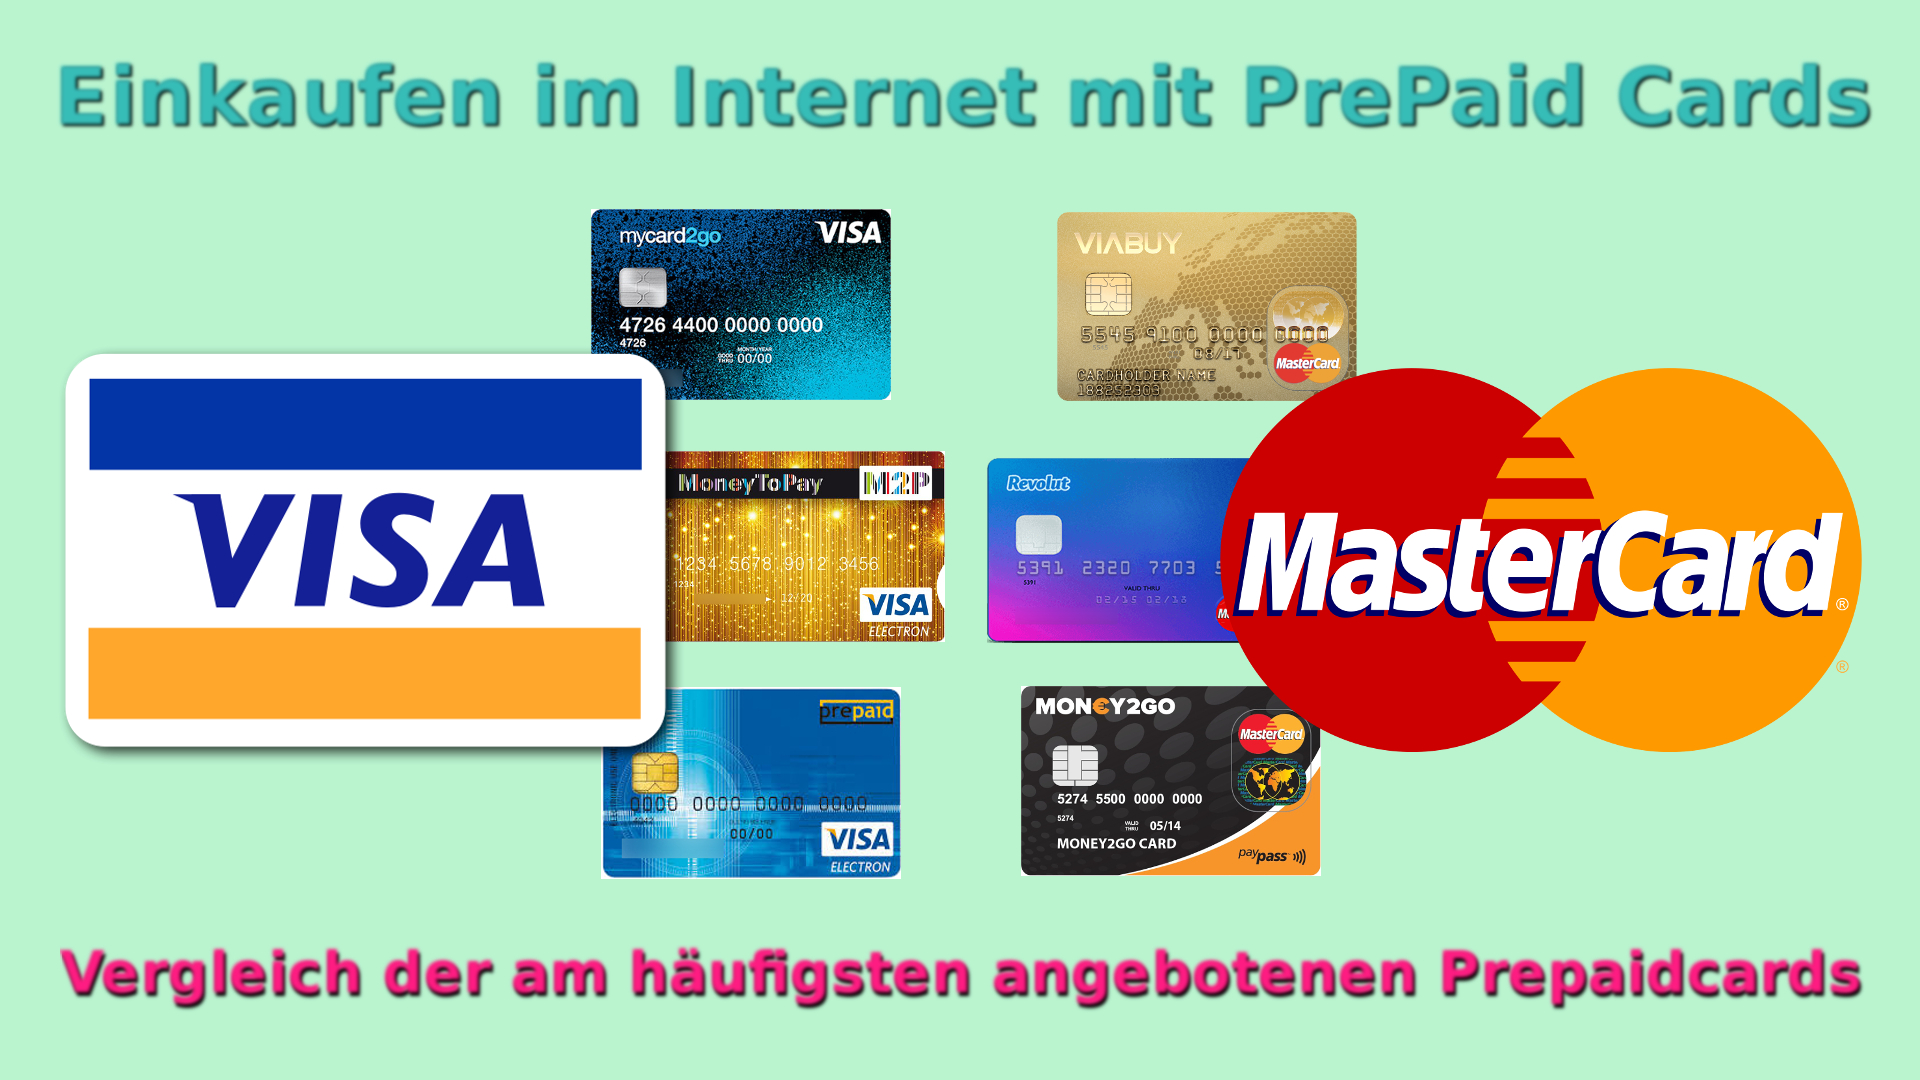 Visa покупка. Предоплатная карта visa. Visa MASTERCARD. Карты виза и Мастеркард. Visa prepaid Card.